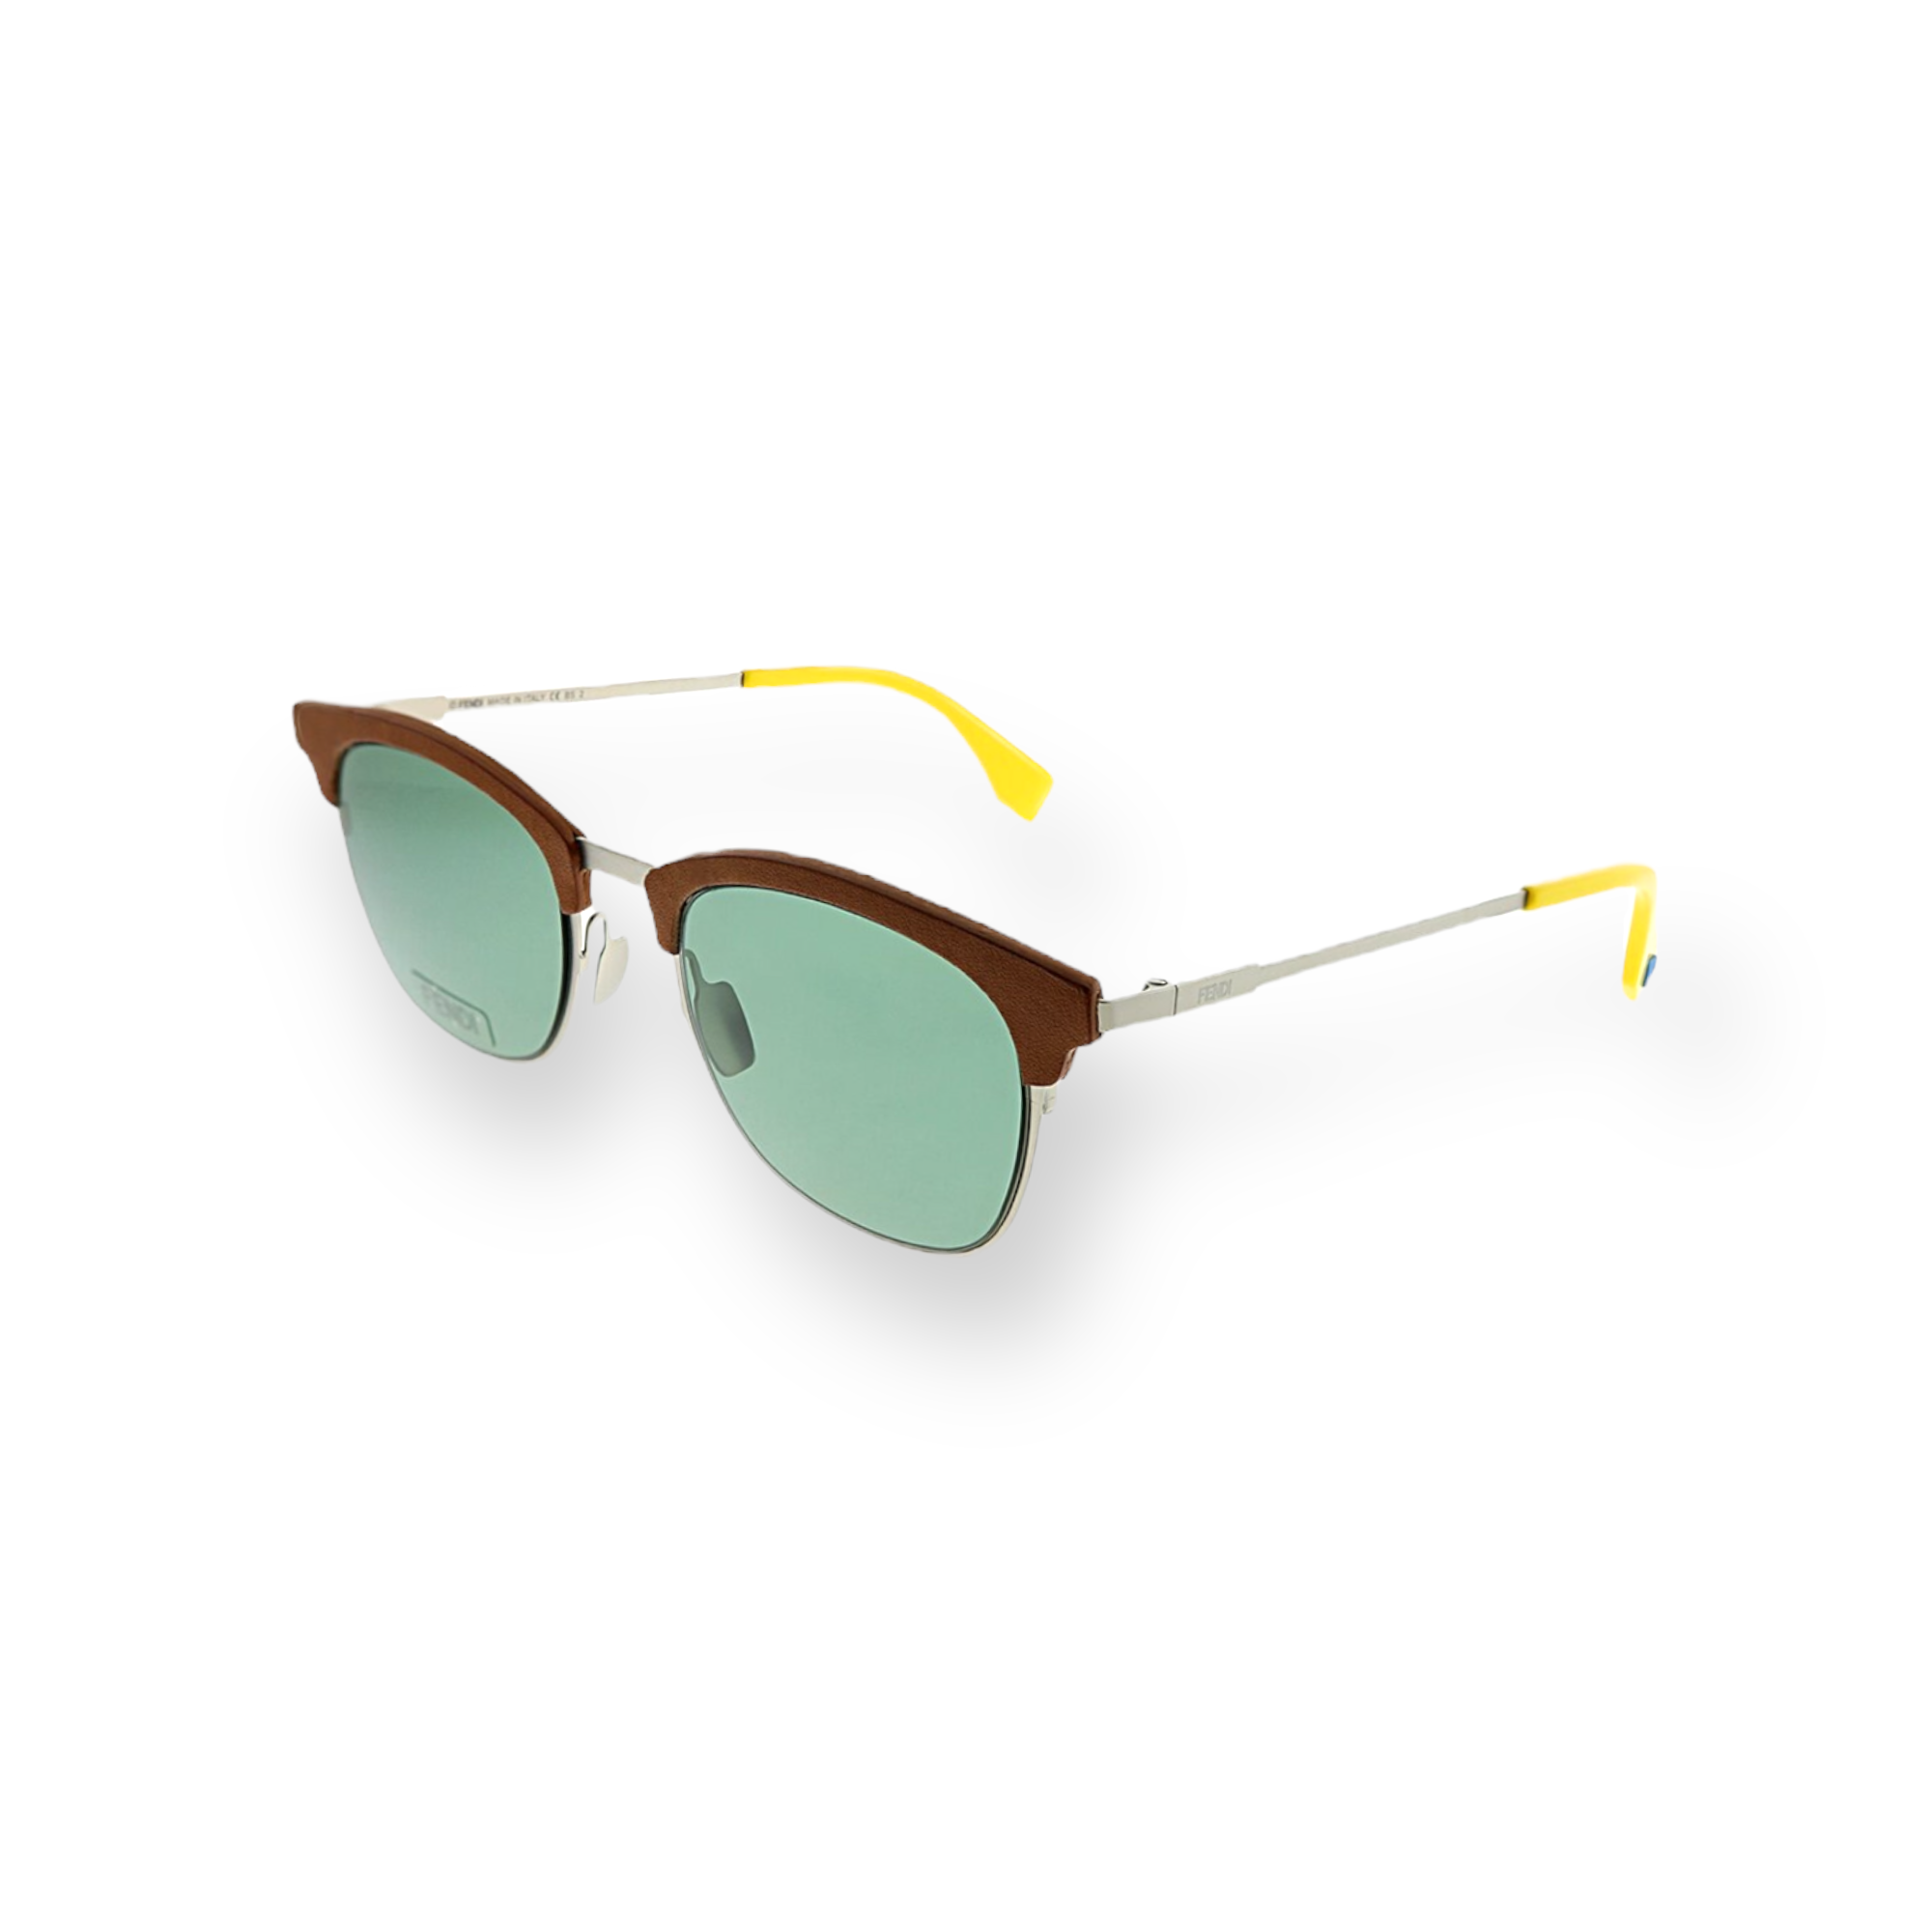 FENDI Men's 50mm Sunglasses